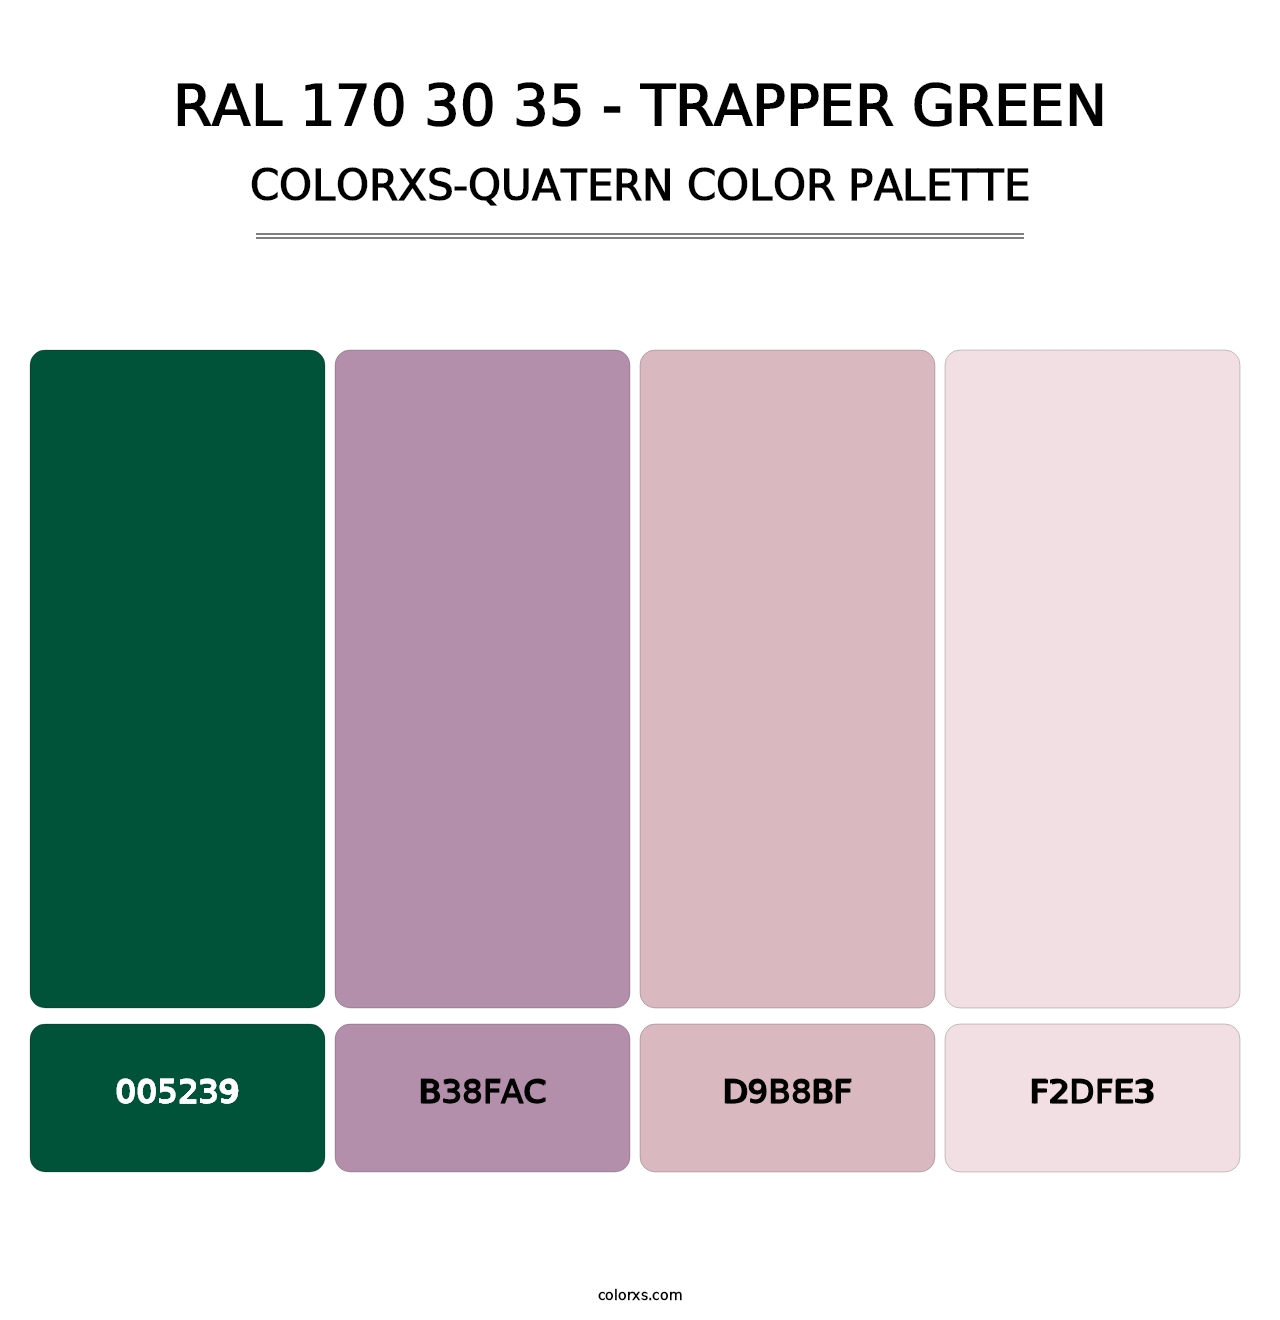 RAL 170 30 35 - Trapper Green - Colorxs Quatern Palette